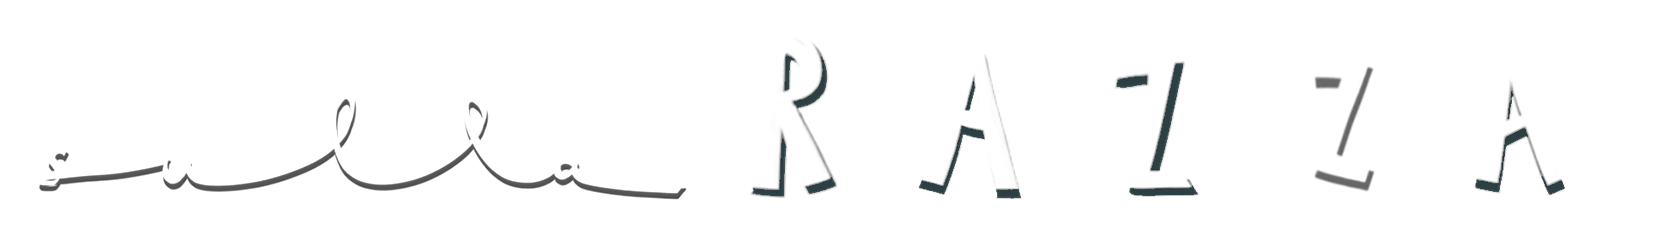 https://www.under.media/wp-content/uploads/2021/01/sulla-razza-logo-new-2.png